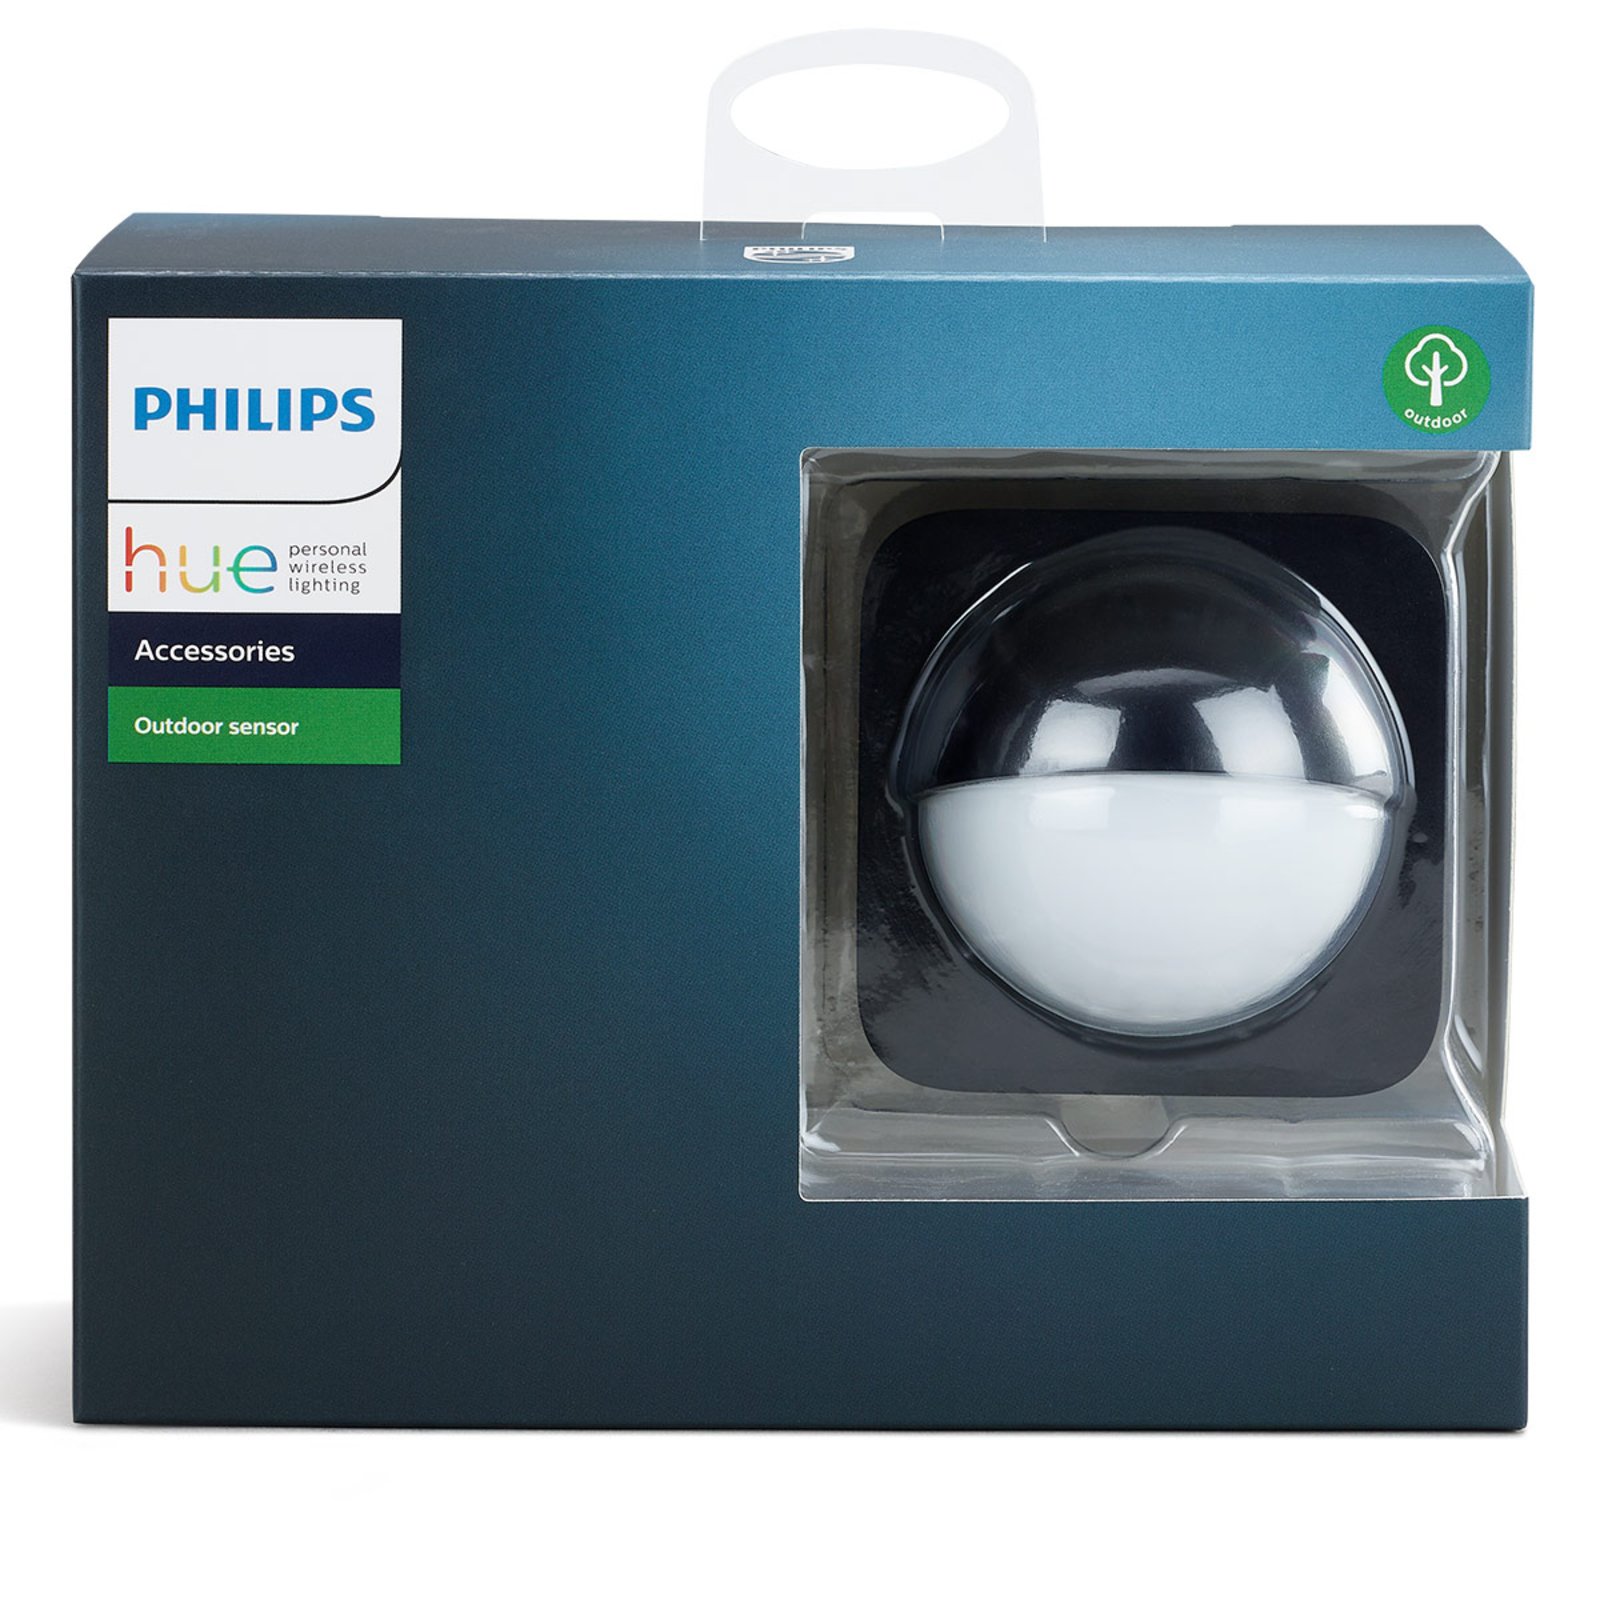 Philips Hue Outdoor Sensor motion detector